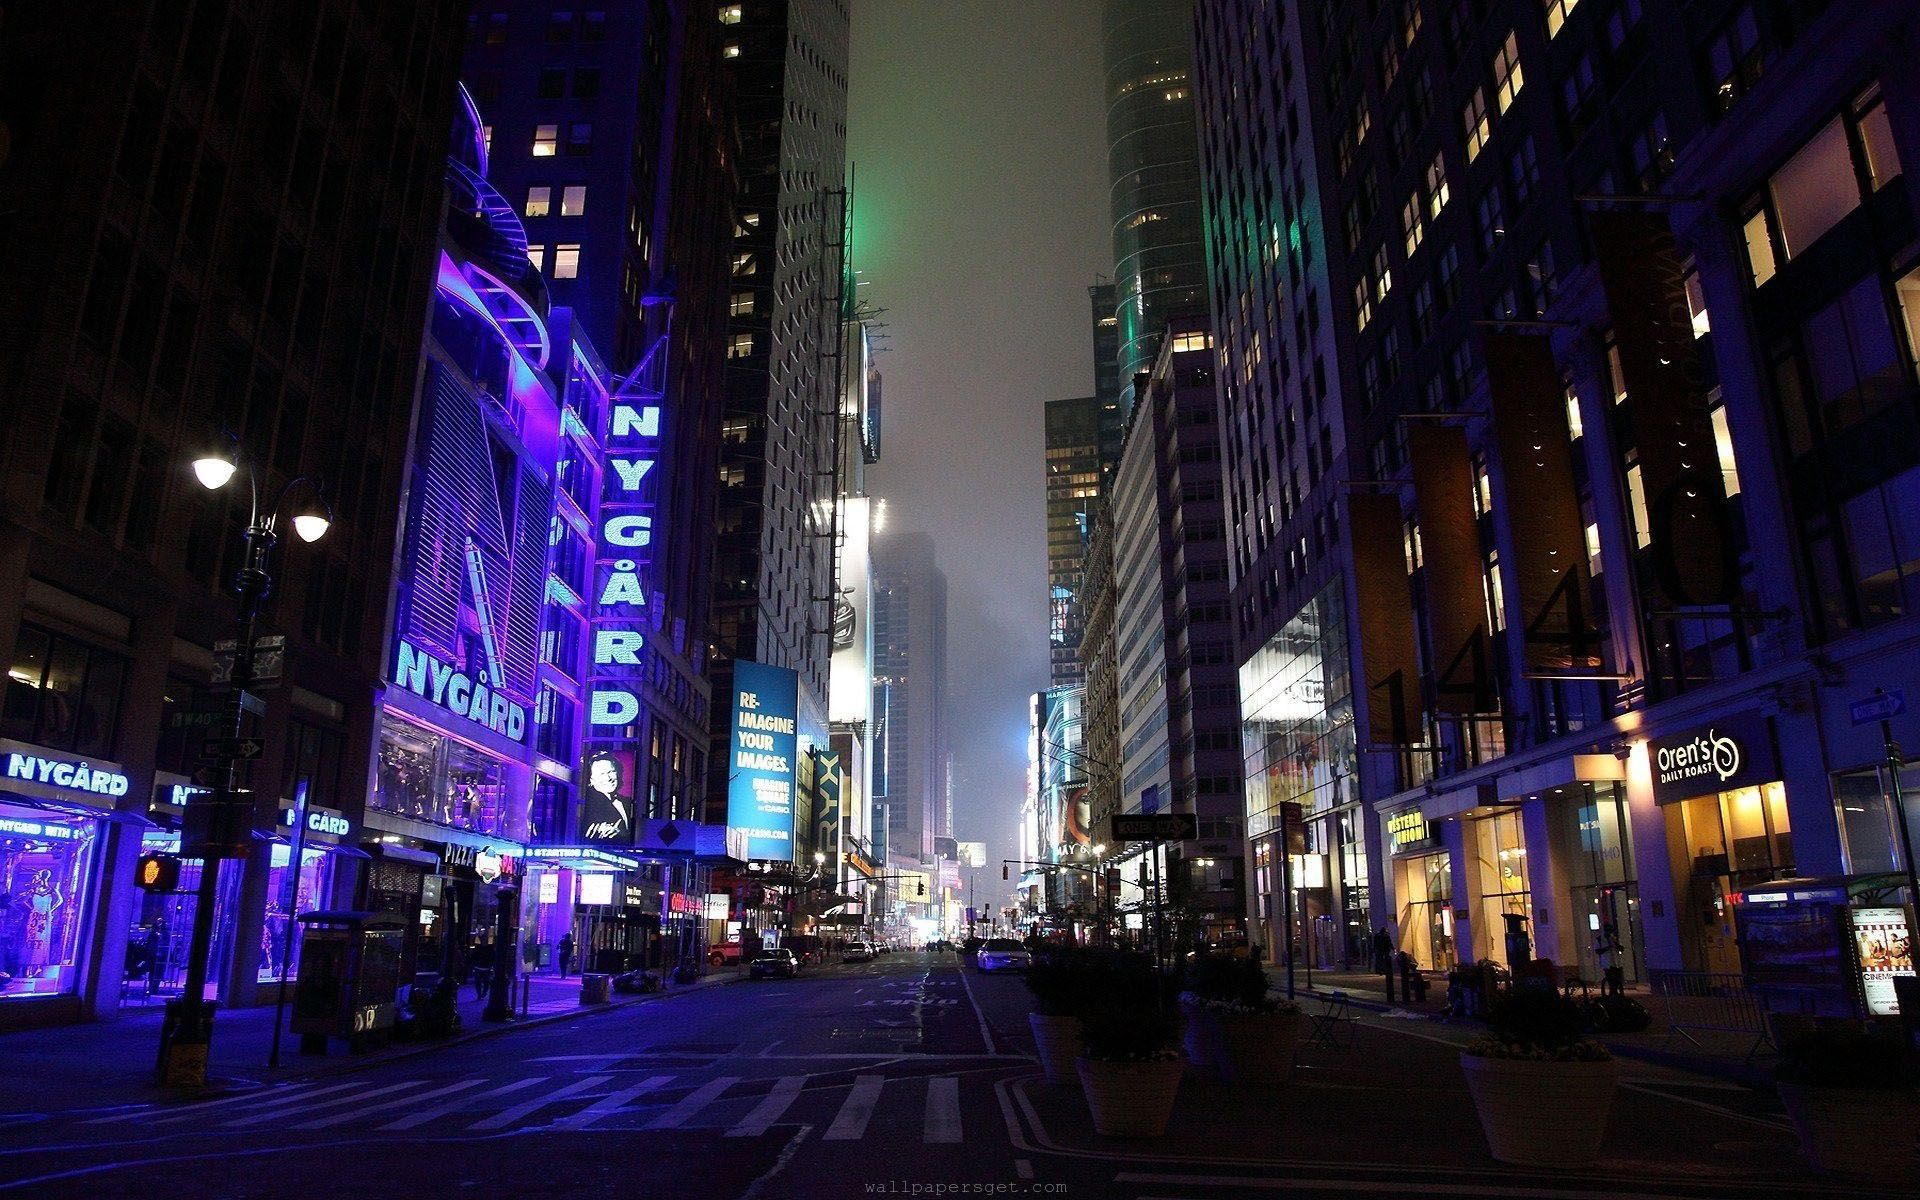 New York City Street At Night High Quality Wallpaper HD. City wallpaper, Night city, City lights